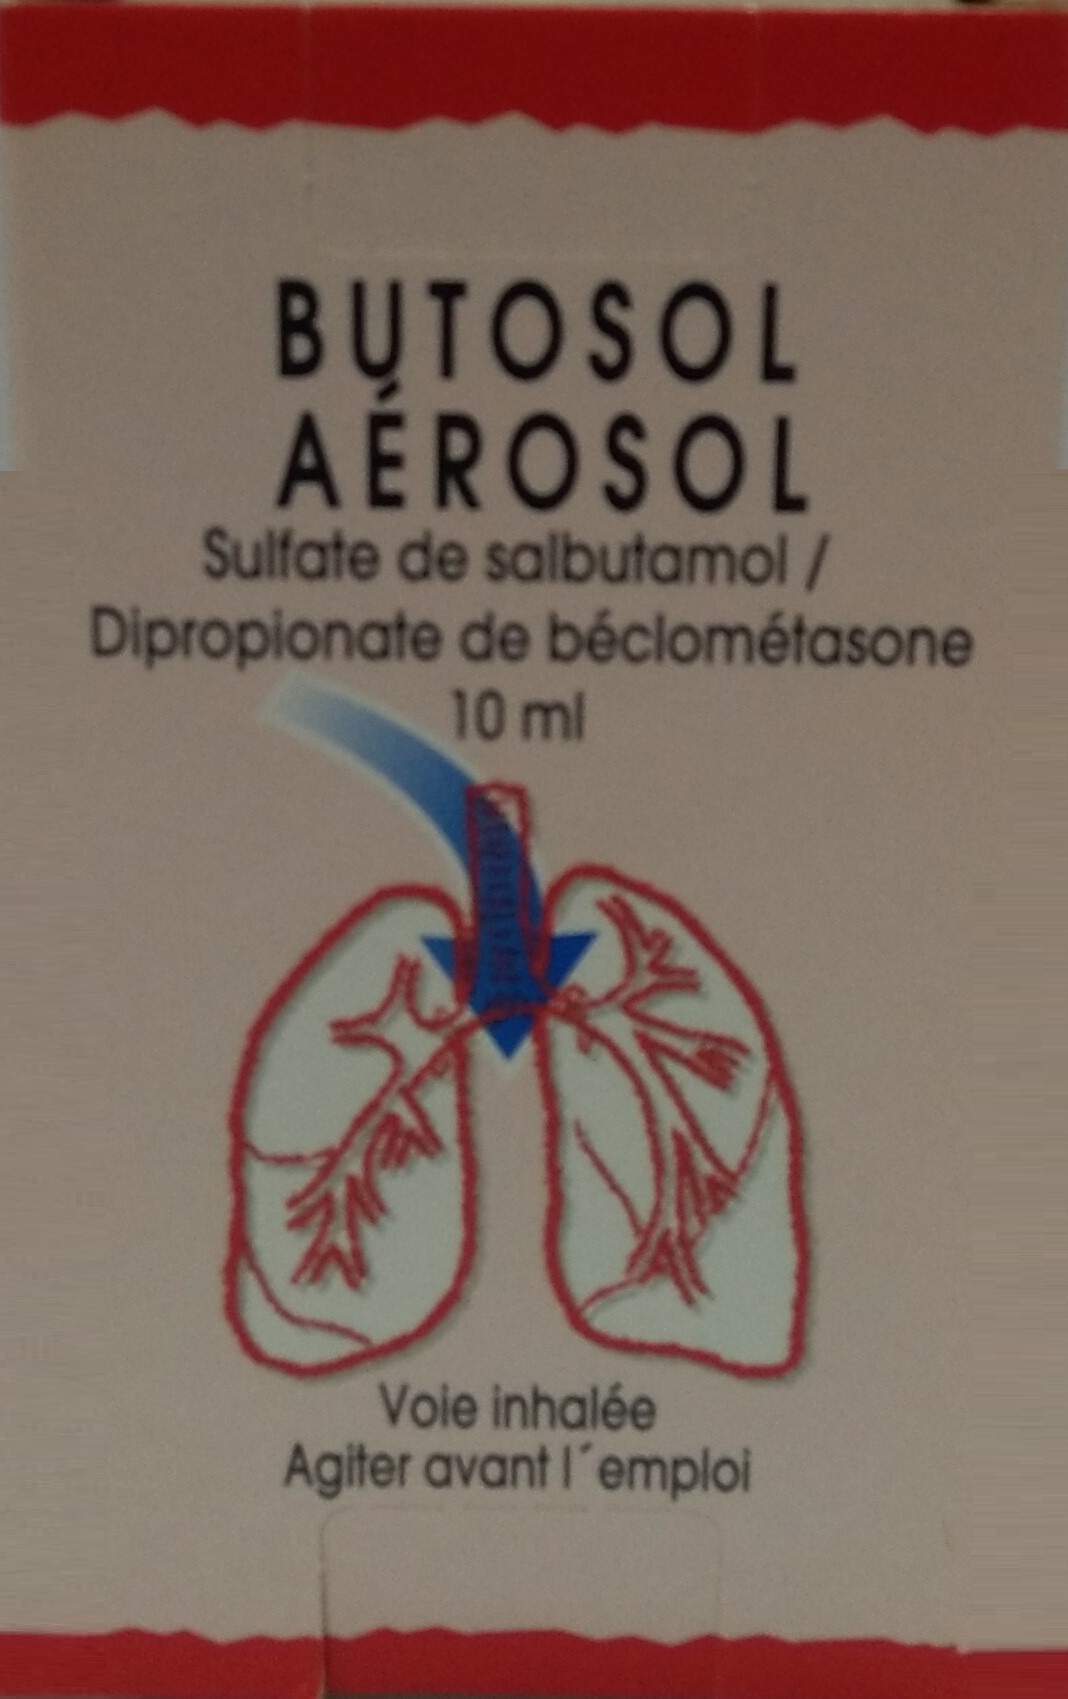 Butosol